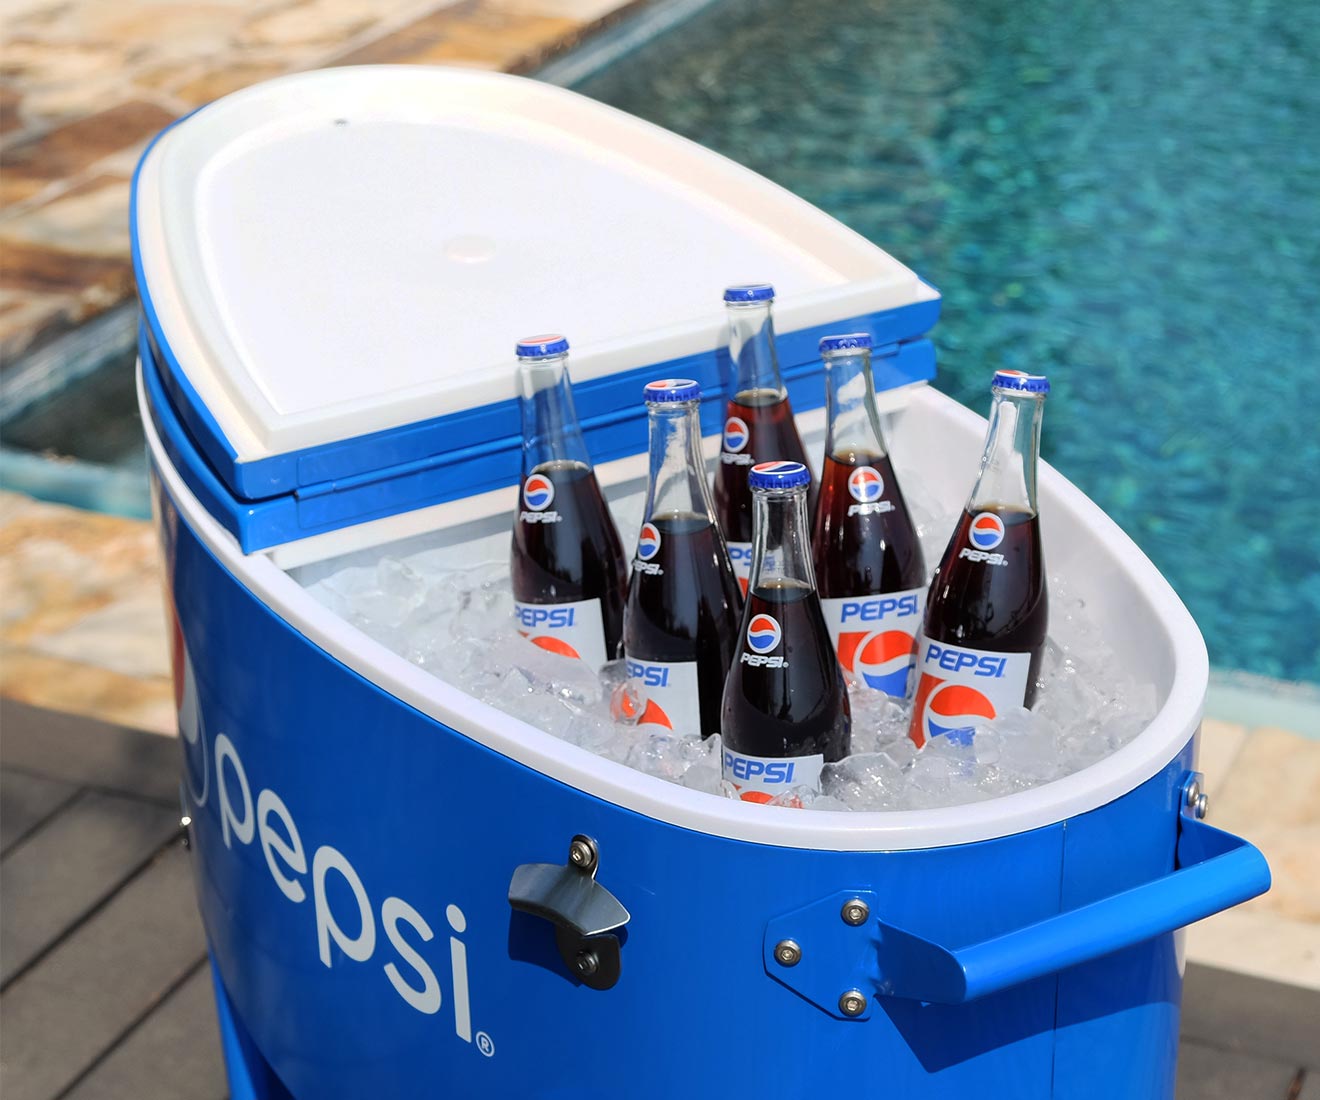 Permasteel Pepsi Branded Licensed Cooler with Ice Cold Pepsi Bottled Drinks Soda Pops Near Pool Setting